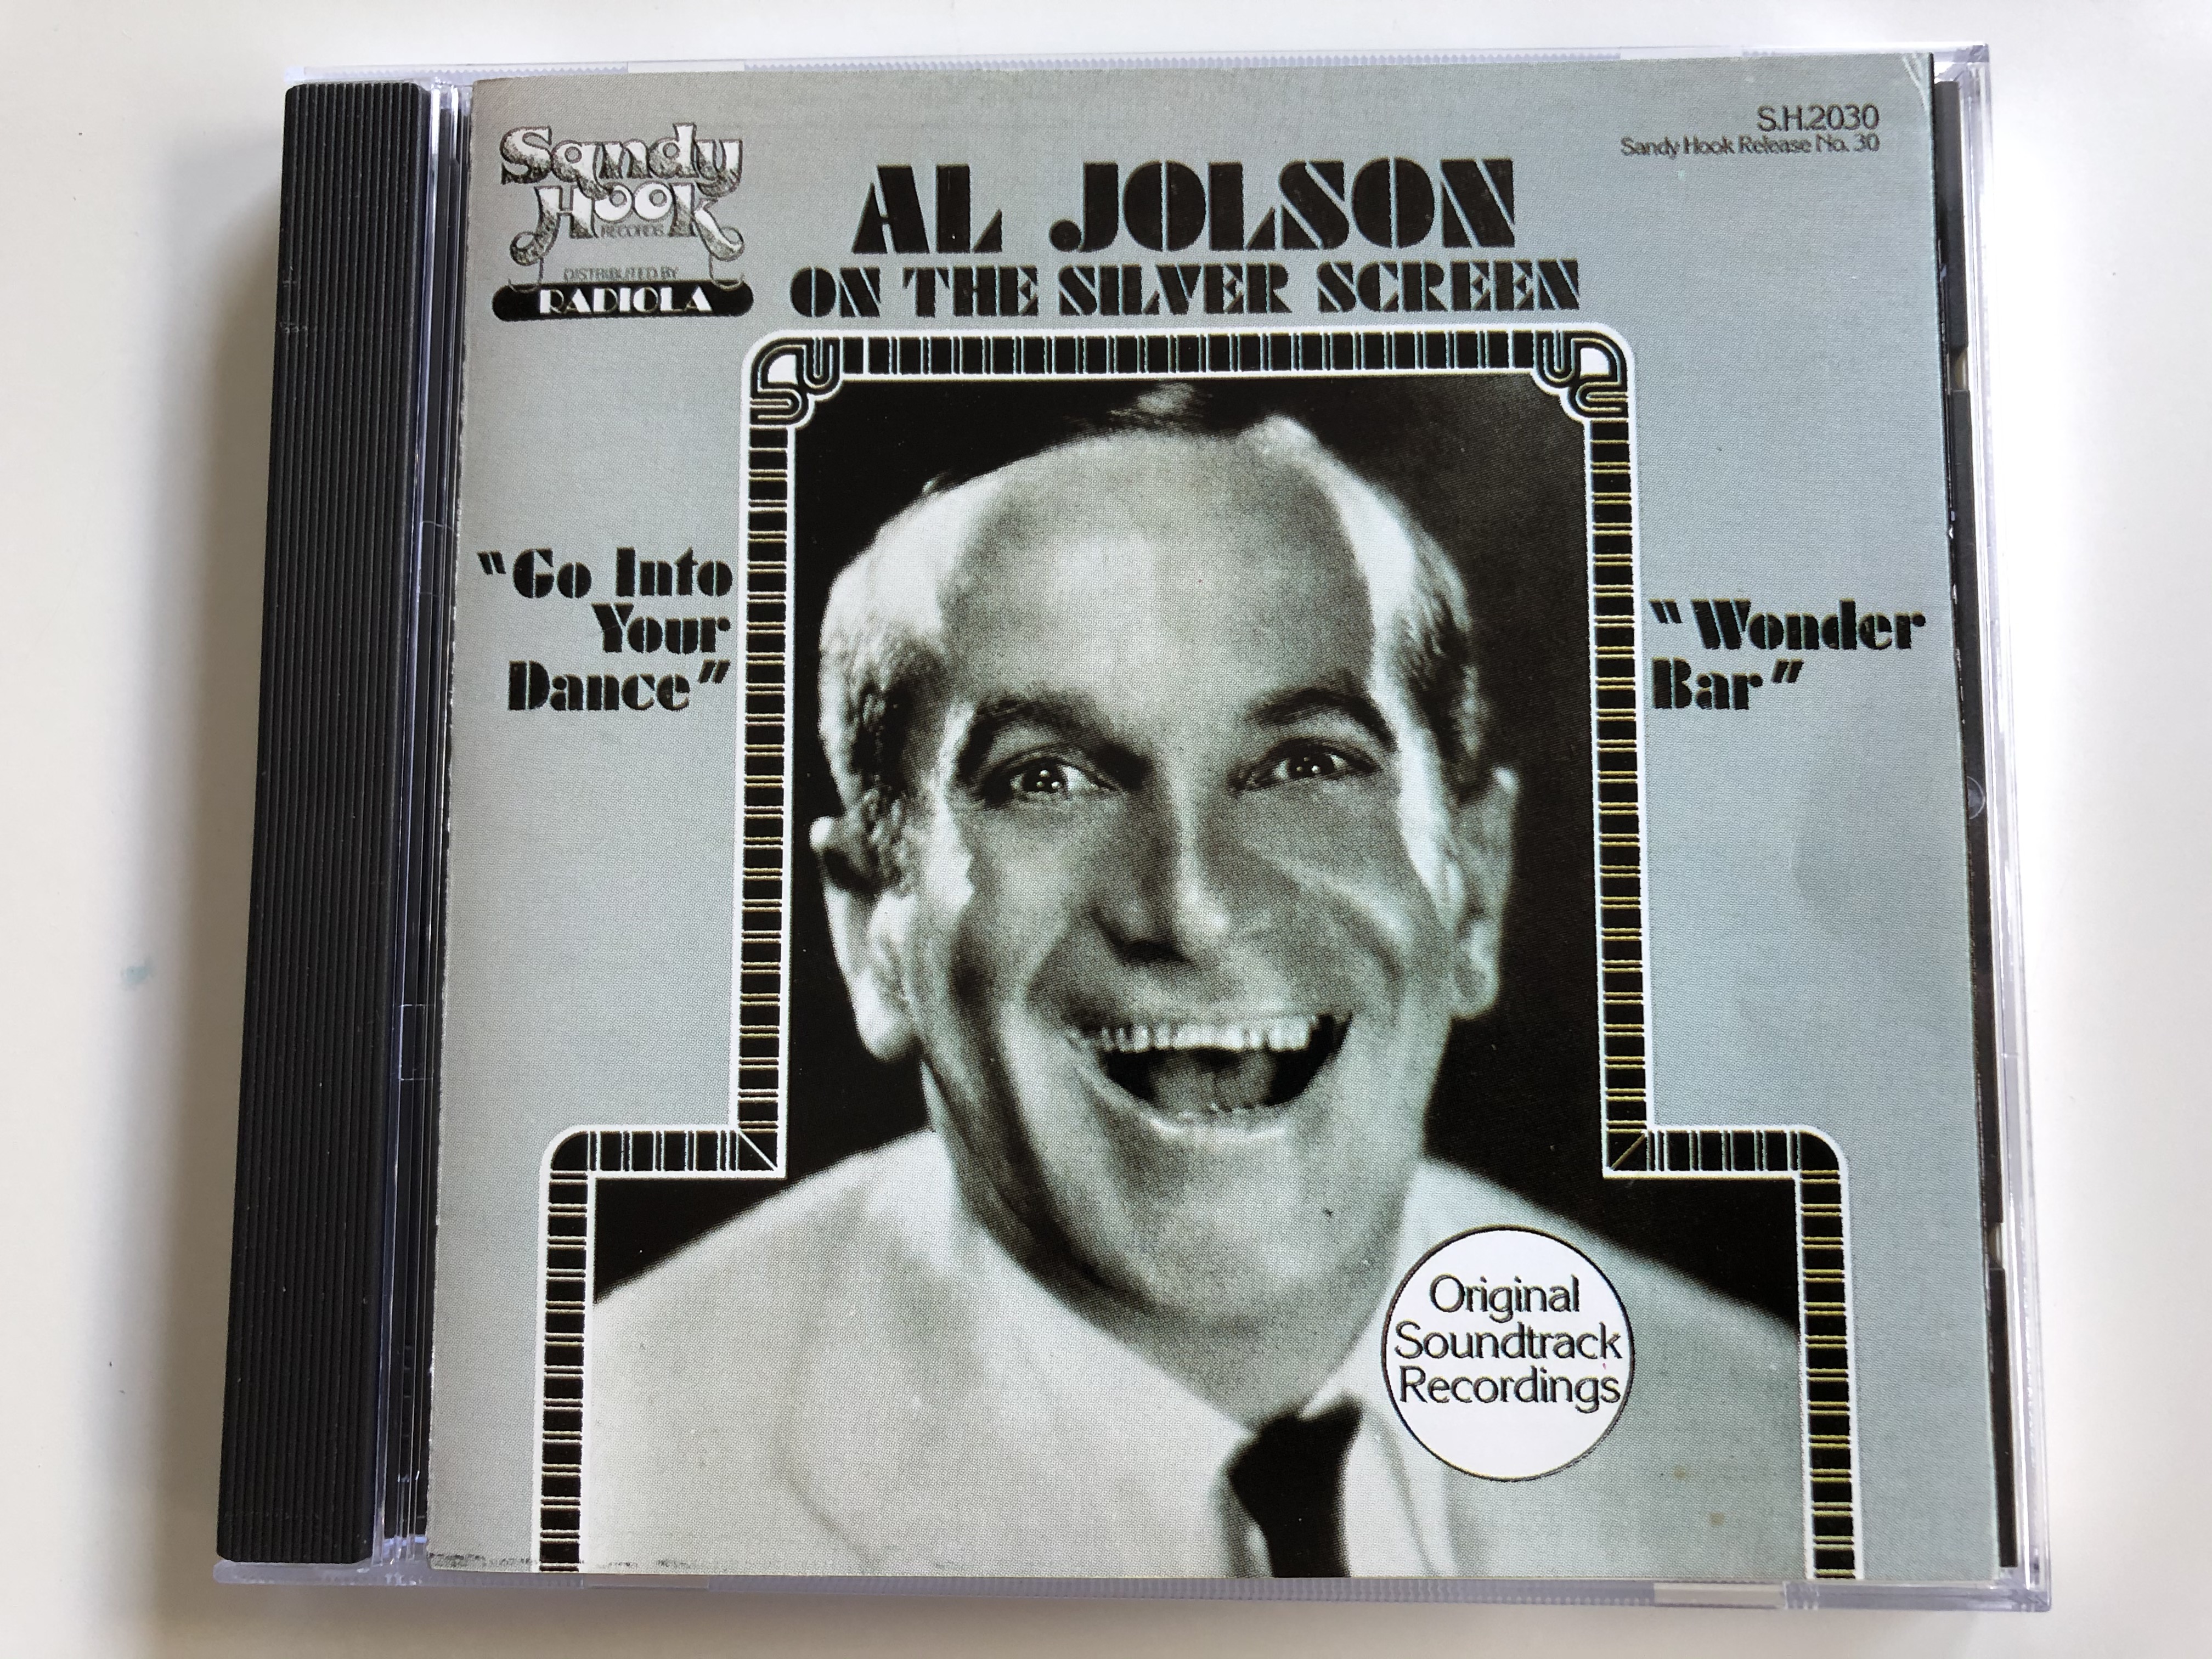 al-jolson-on-the-silver-screen-go-into-your-dance-wonder-bar-original-soundtrack-recordings-sandy-hook-records-audio-cd-1980-cdsh-2030-1-.jpg